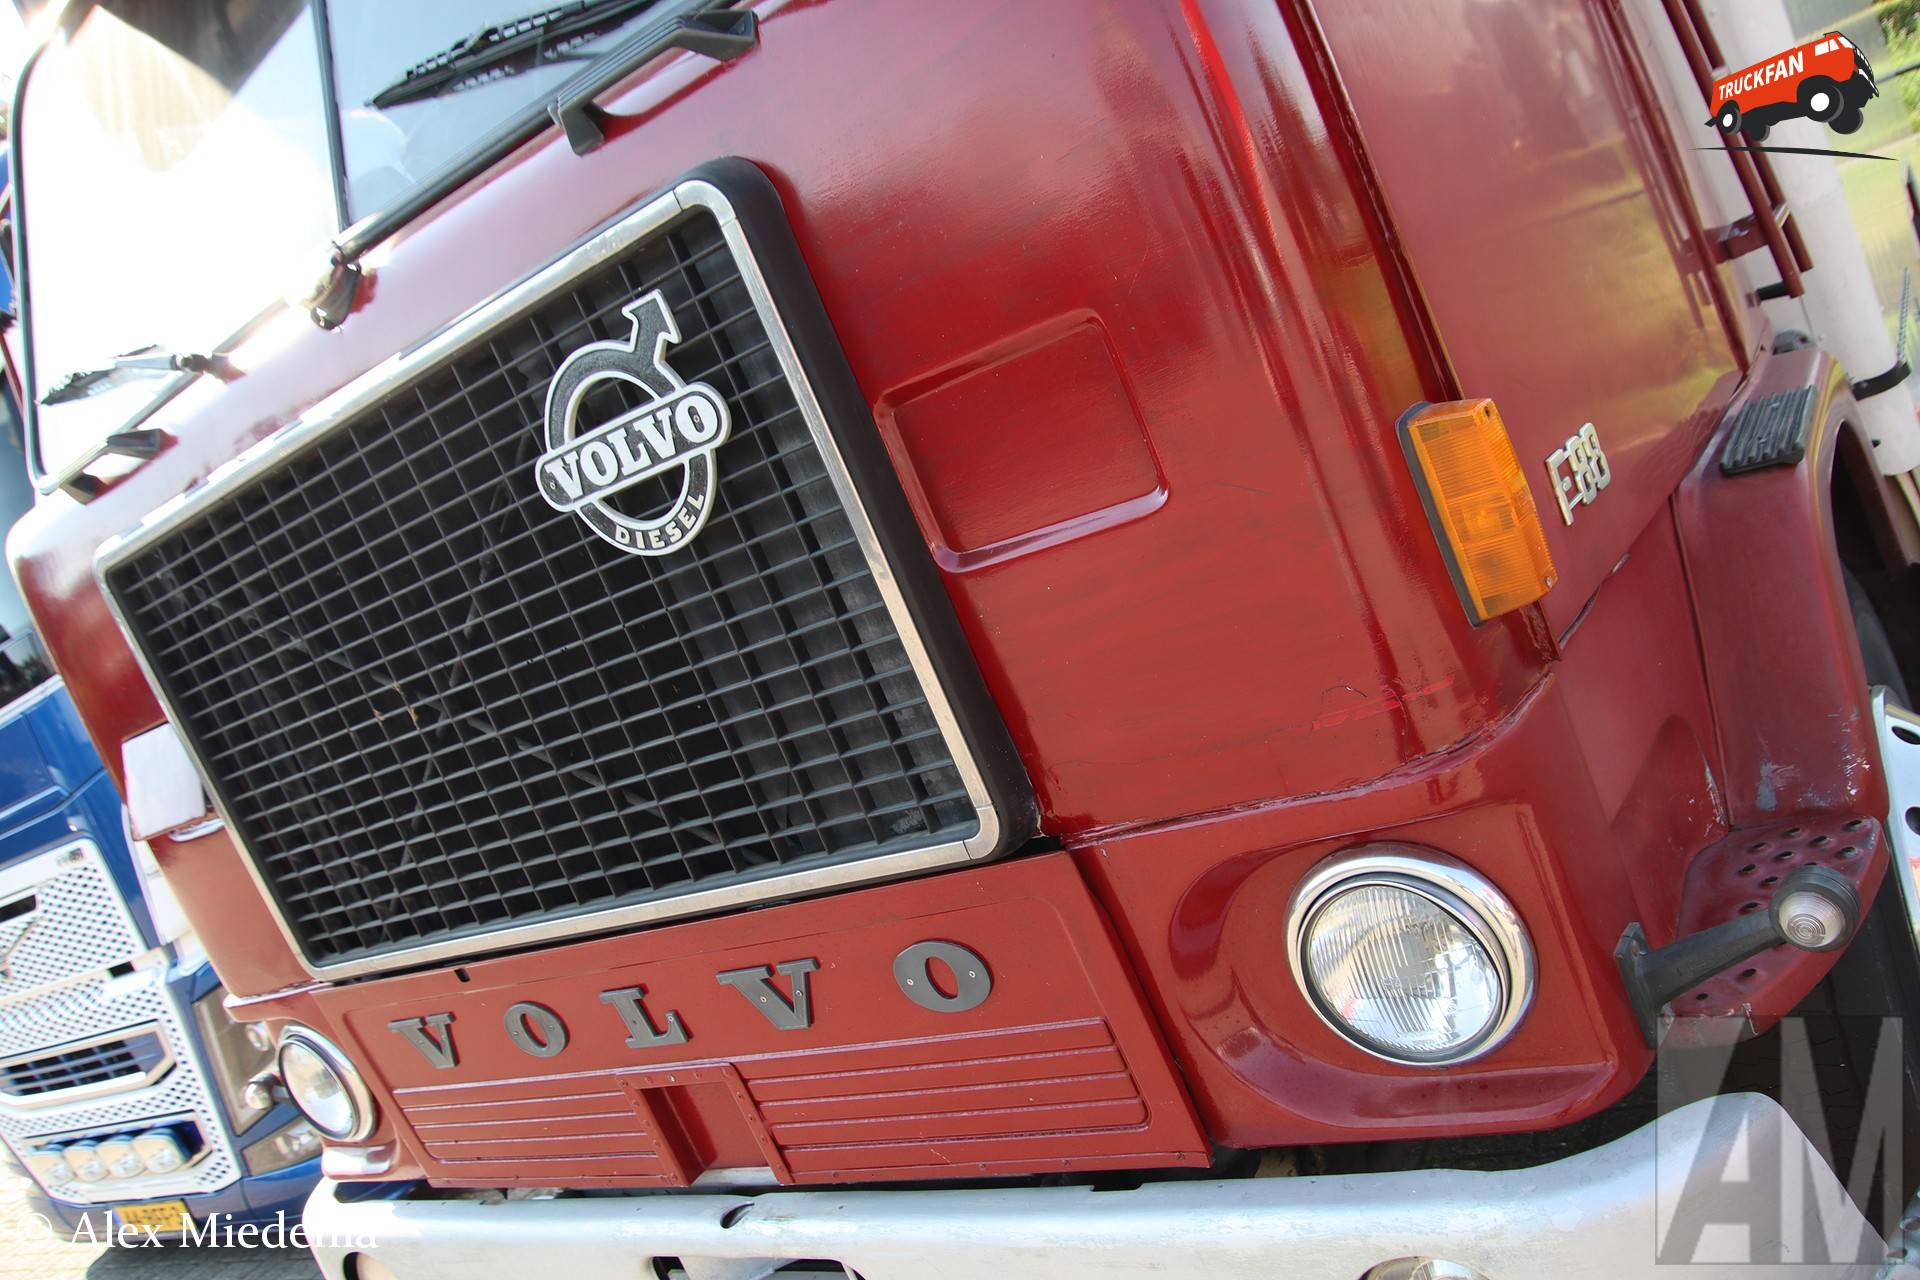 Volvo F88